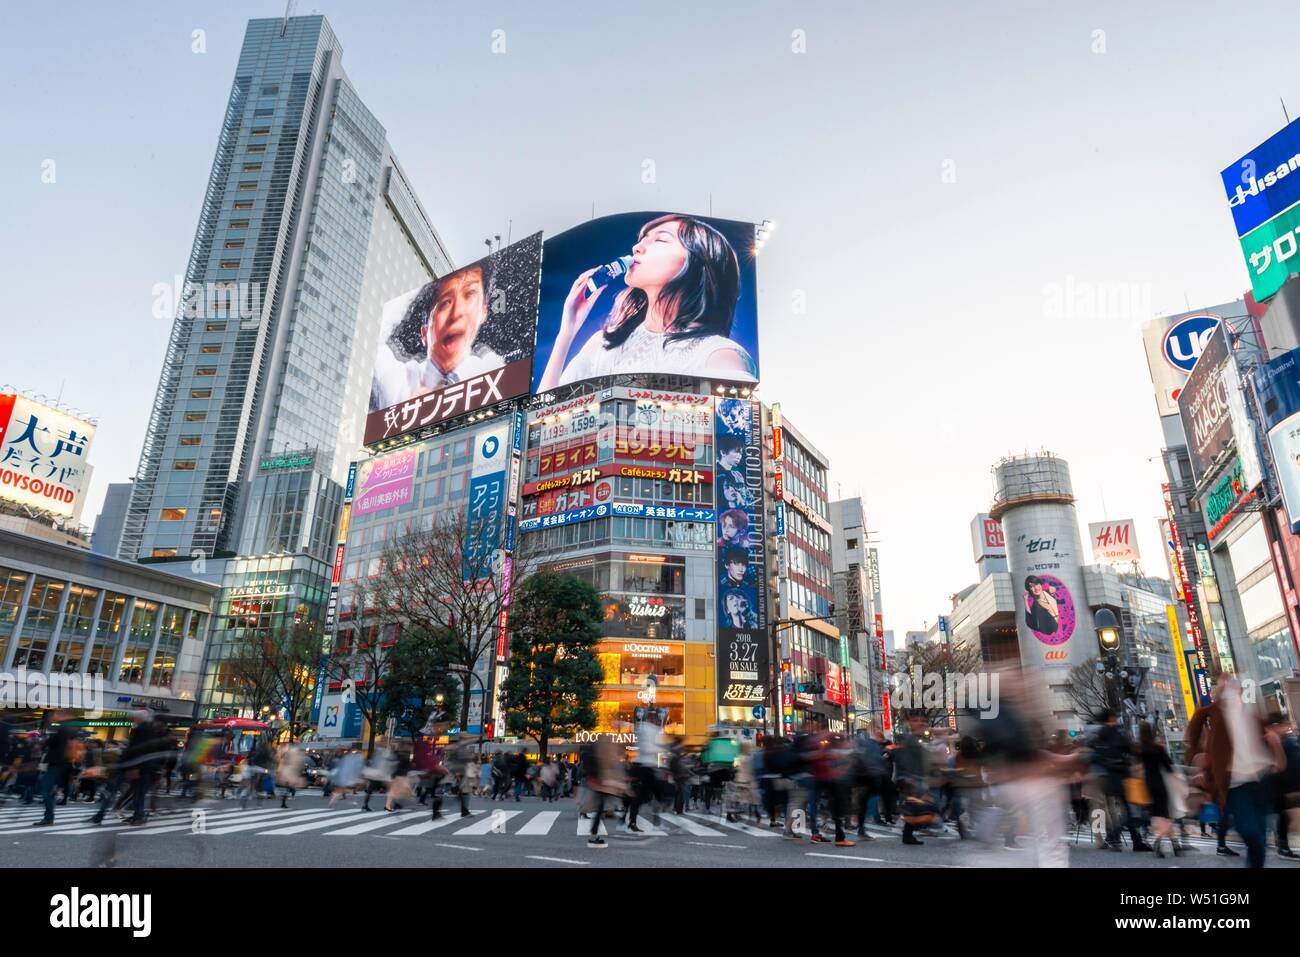 Shibuya Crossing, crossing with many pedestrians, many shopping centers and shops, illuminated advertising on skyscrapers, Shibuya, Tokyo, Japan Stock Photo